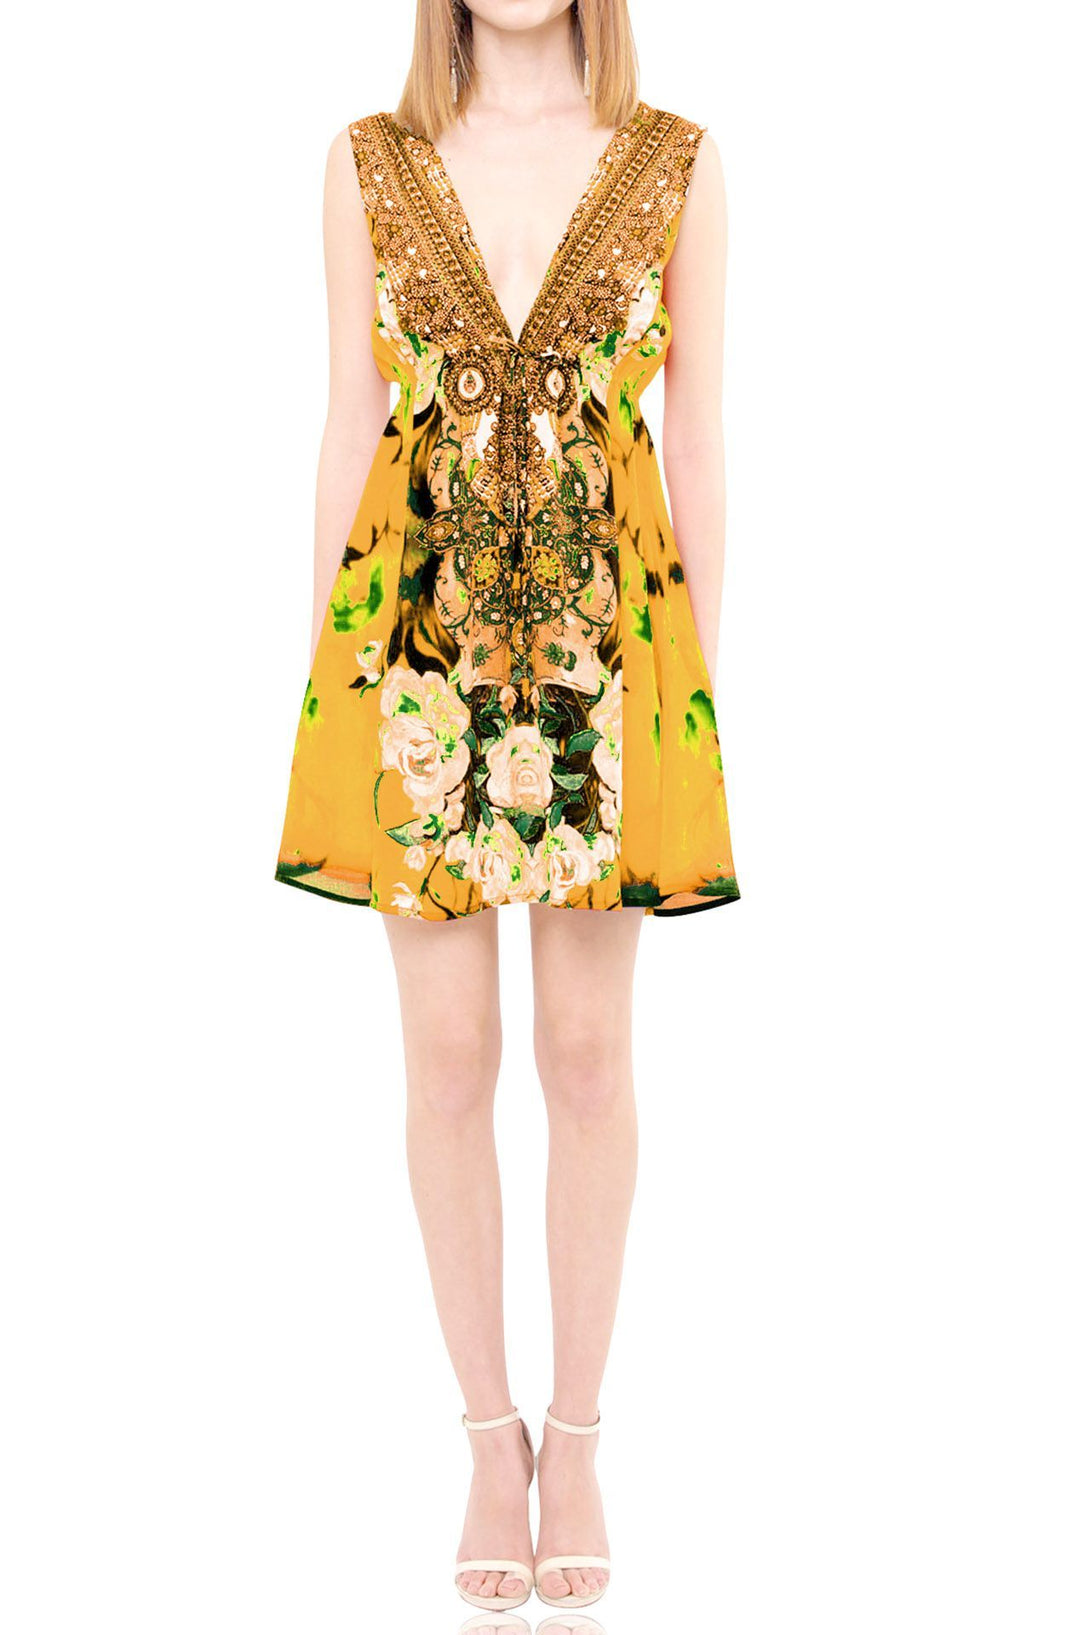  yellow satin mini dress, Shahida Parides, sexy short dresses, short sleeveless dress, floral print dress,